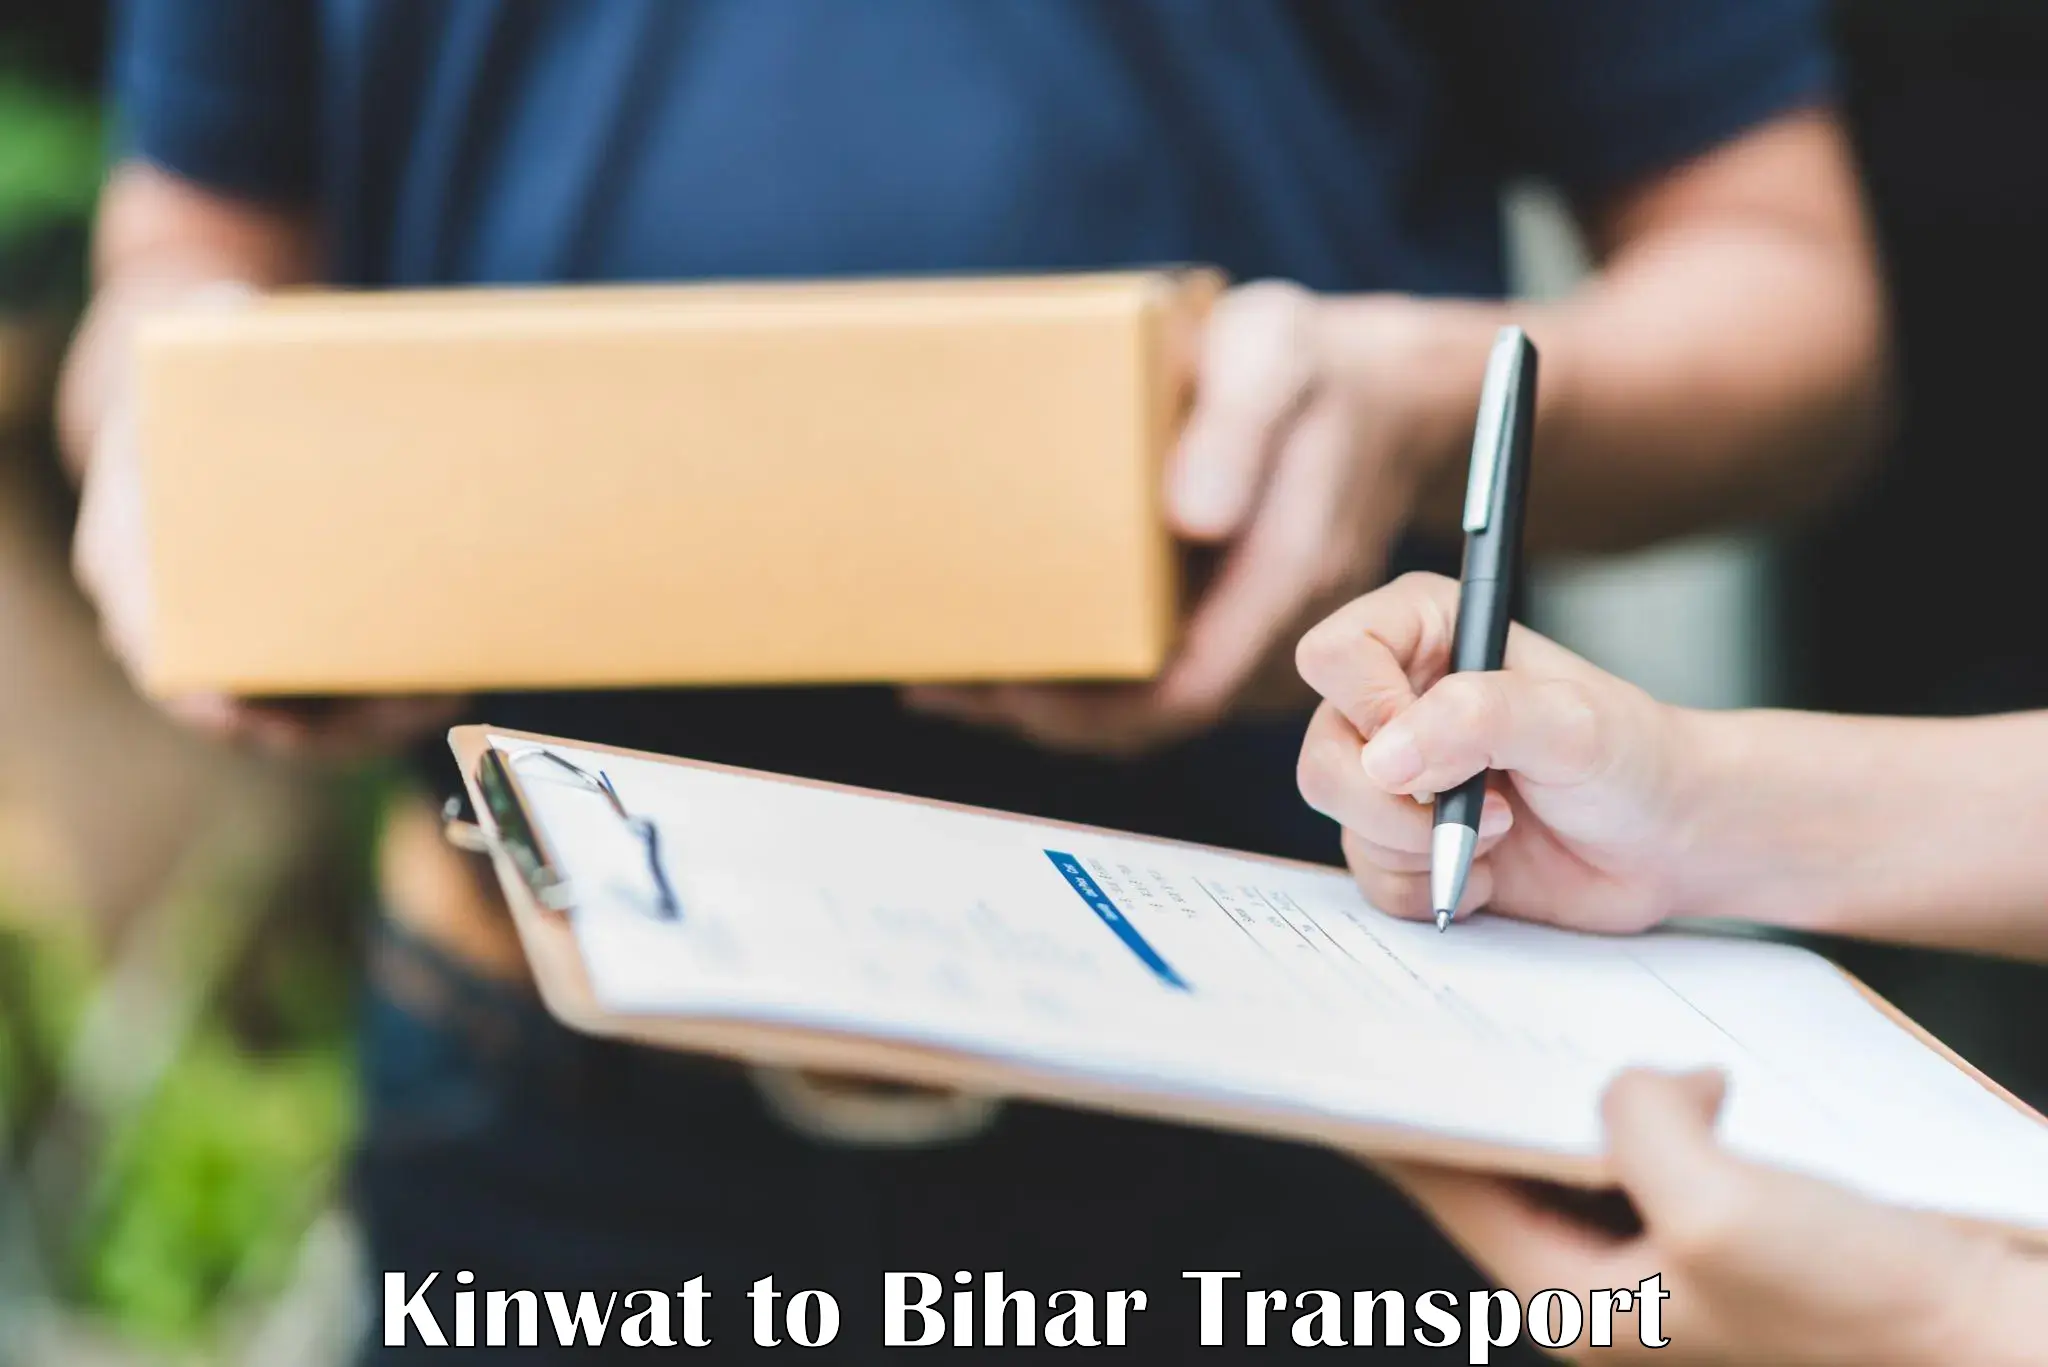 Shipping partner Kinwat to Katoria